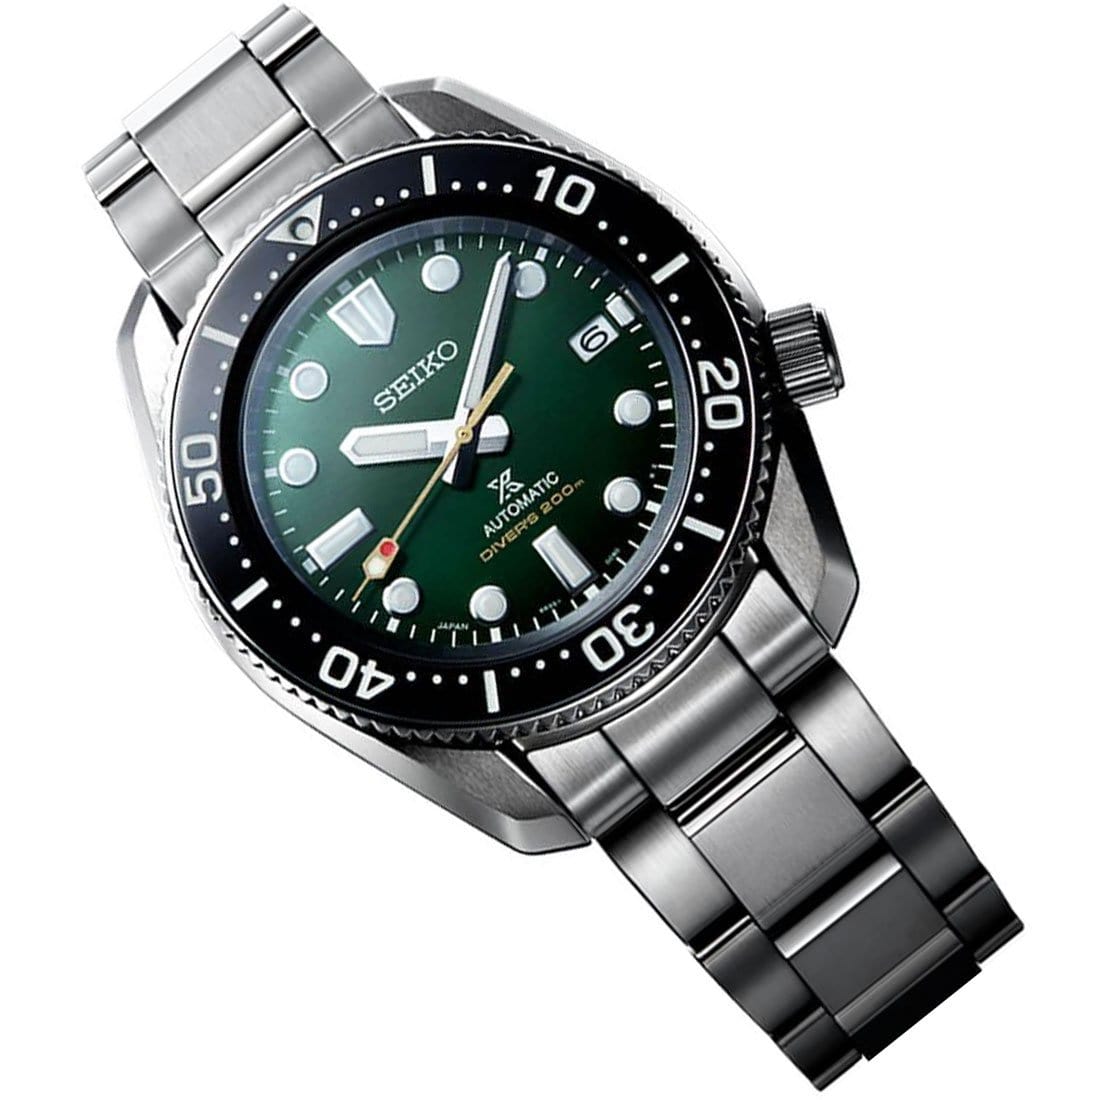 Seiko SBDC133 Prospex Marinemaster 140th Anniversary Limited Edition JDM Watch